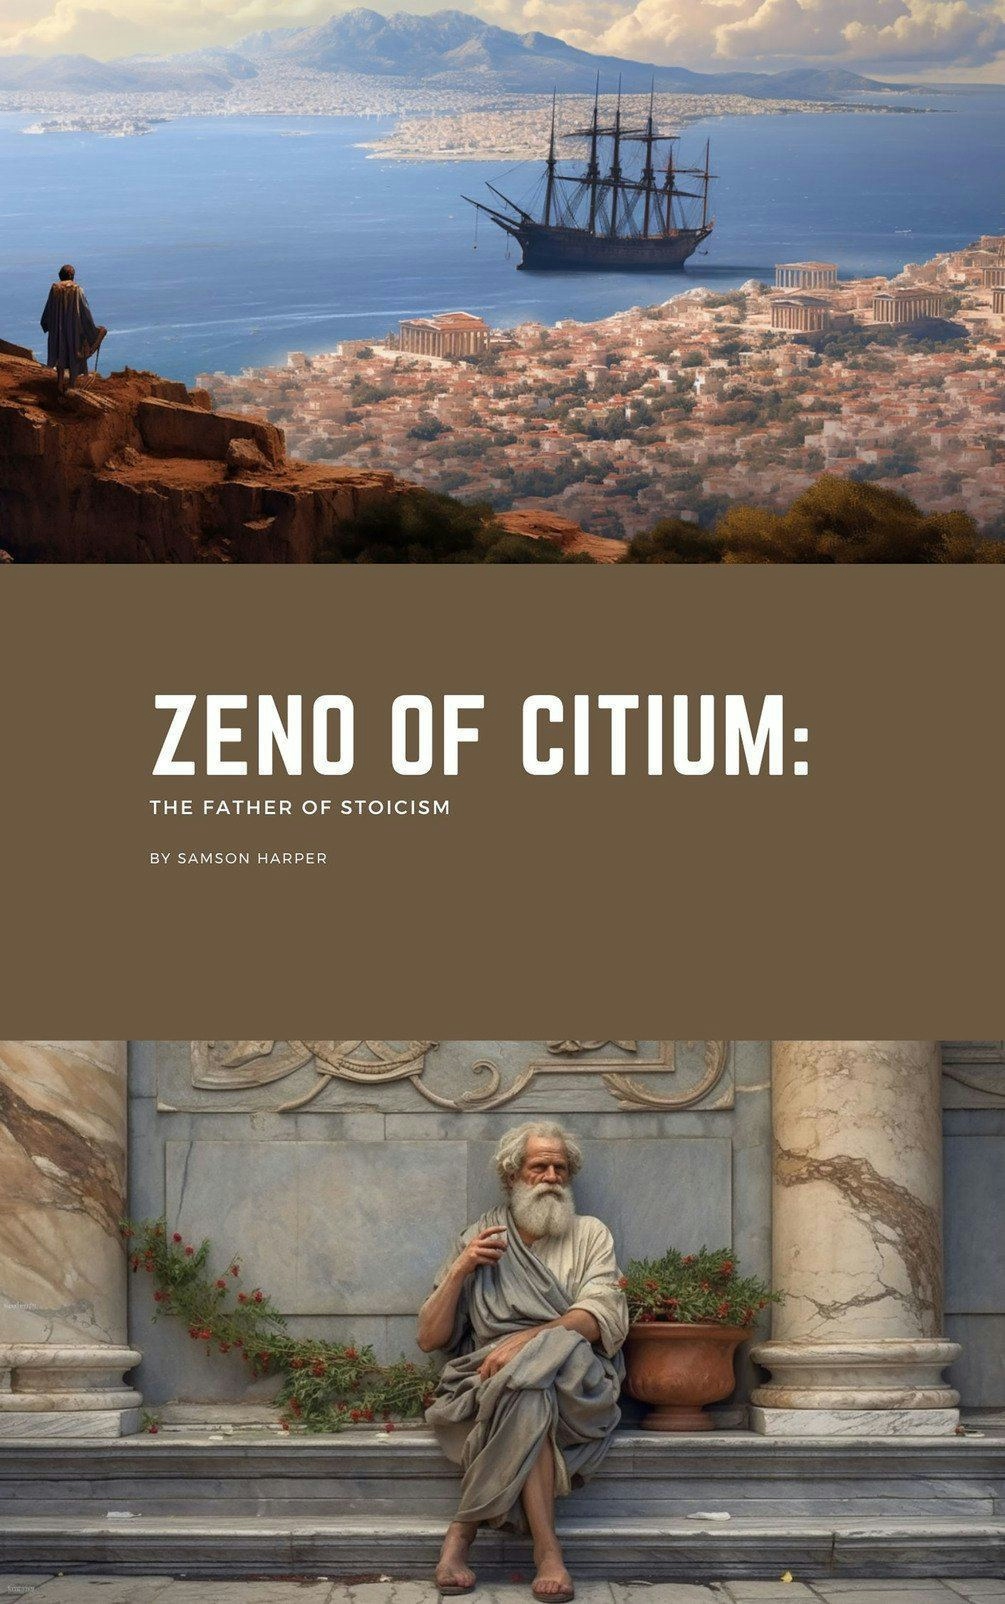 Zeno of Citium: The Father of Stoicism